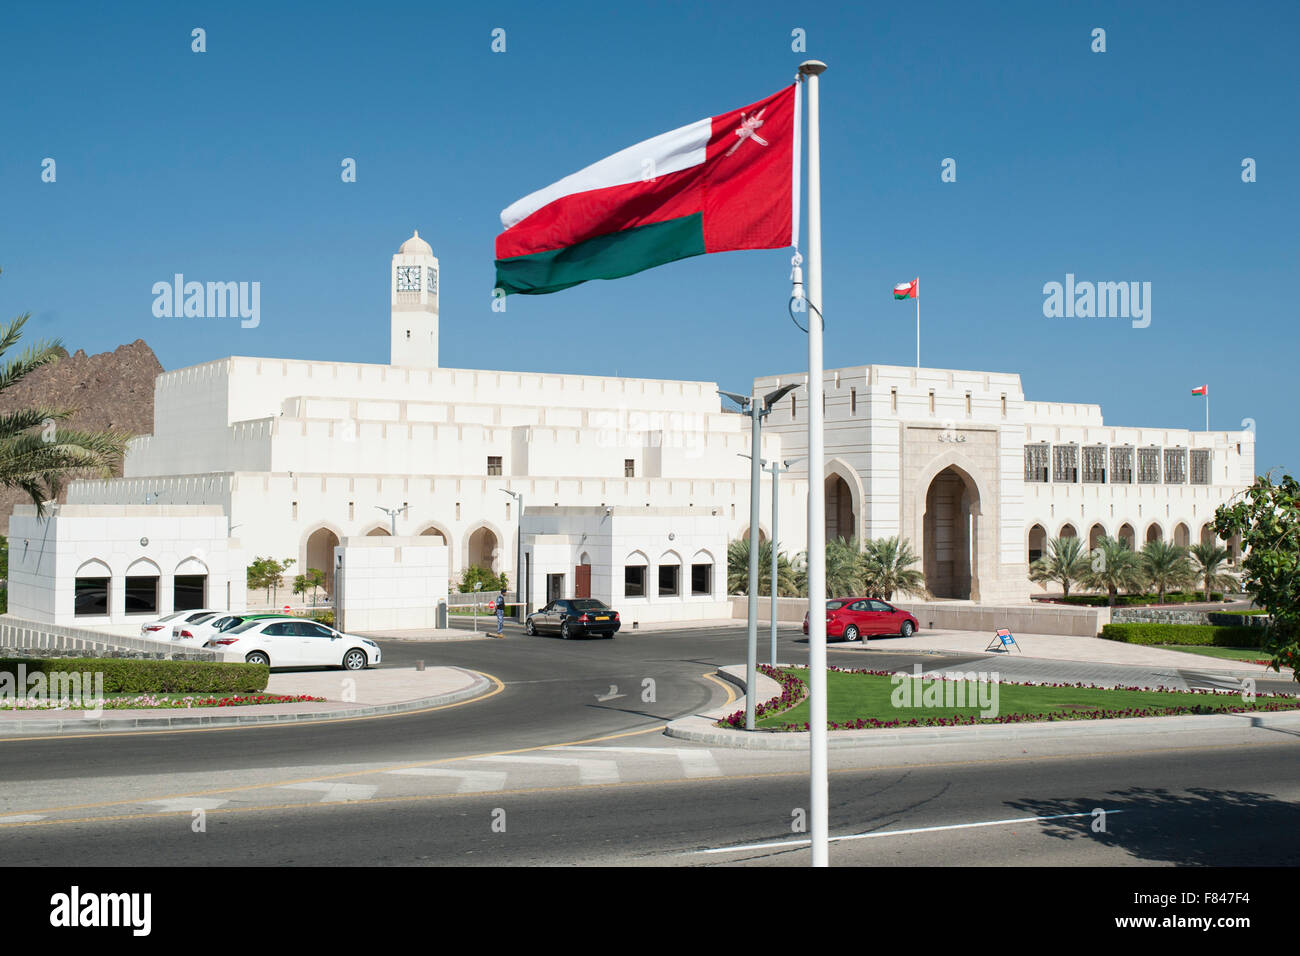 Der Oman Parlamentsgebäude in Muscat, der Hauptstadt des Sultanats Oman. Stockfoto